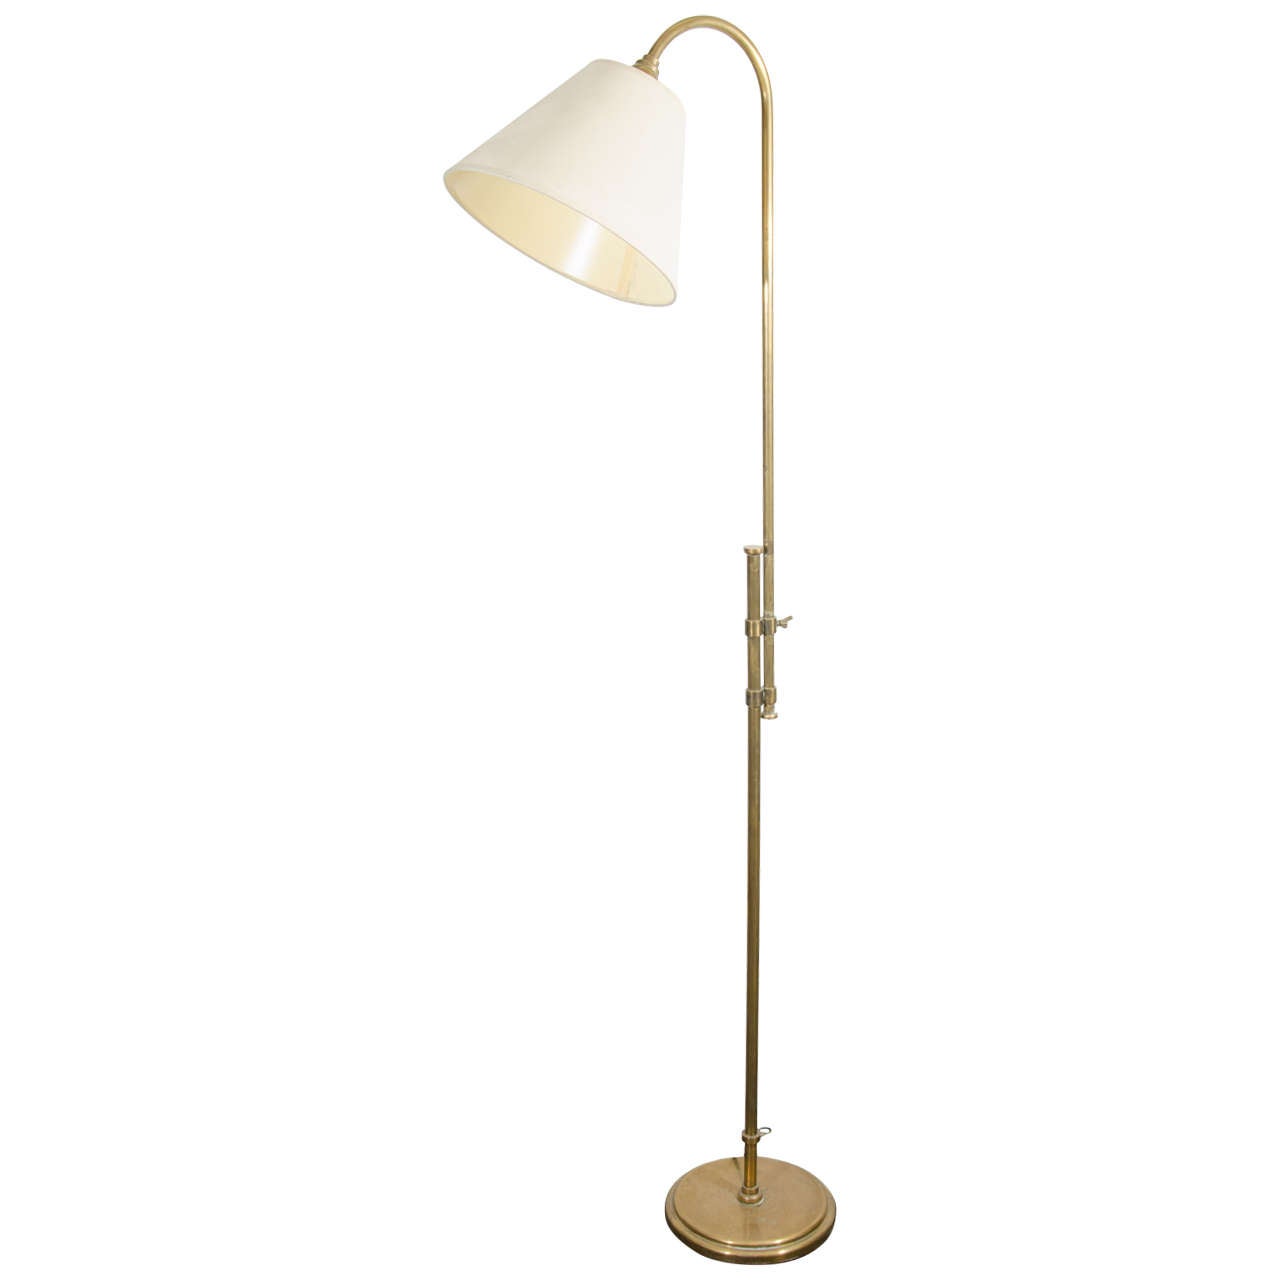 Modern Adjustable Pole Lamp - For Sale on 1stDibs